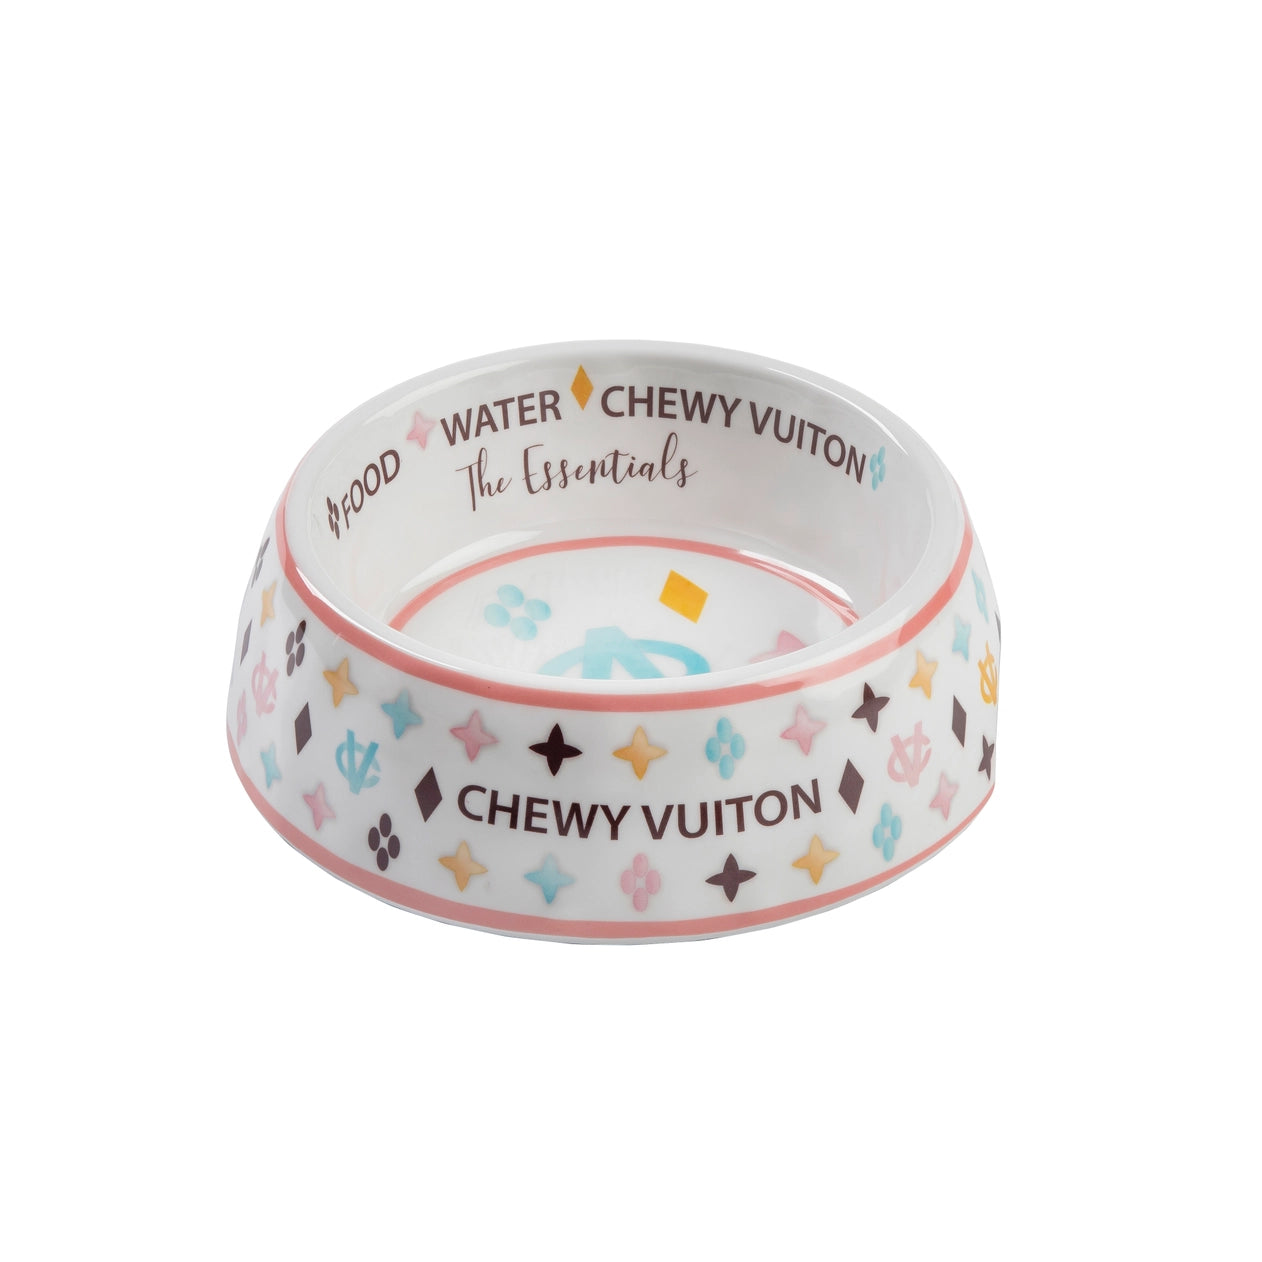 White Chewy Vuiton Dog Bowl